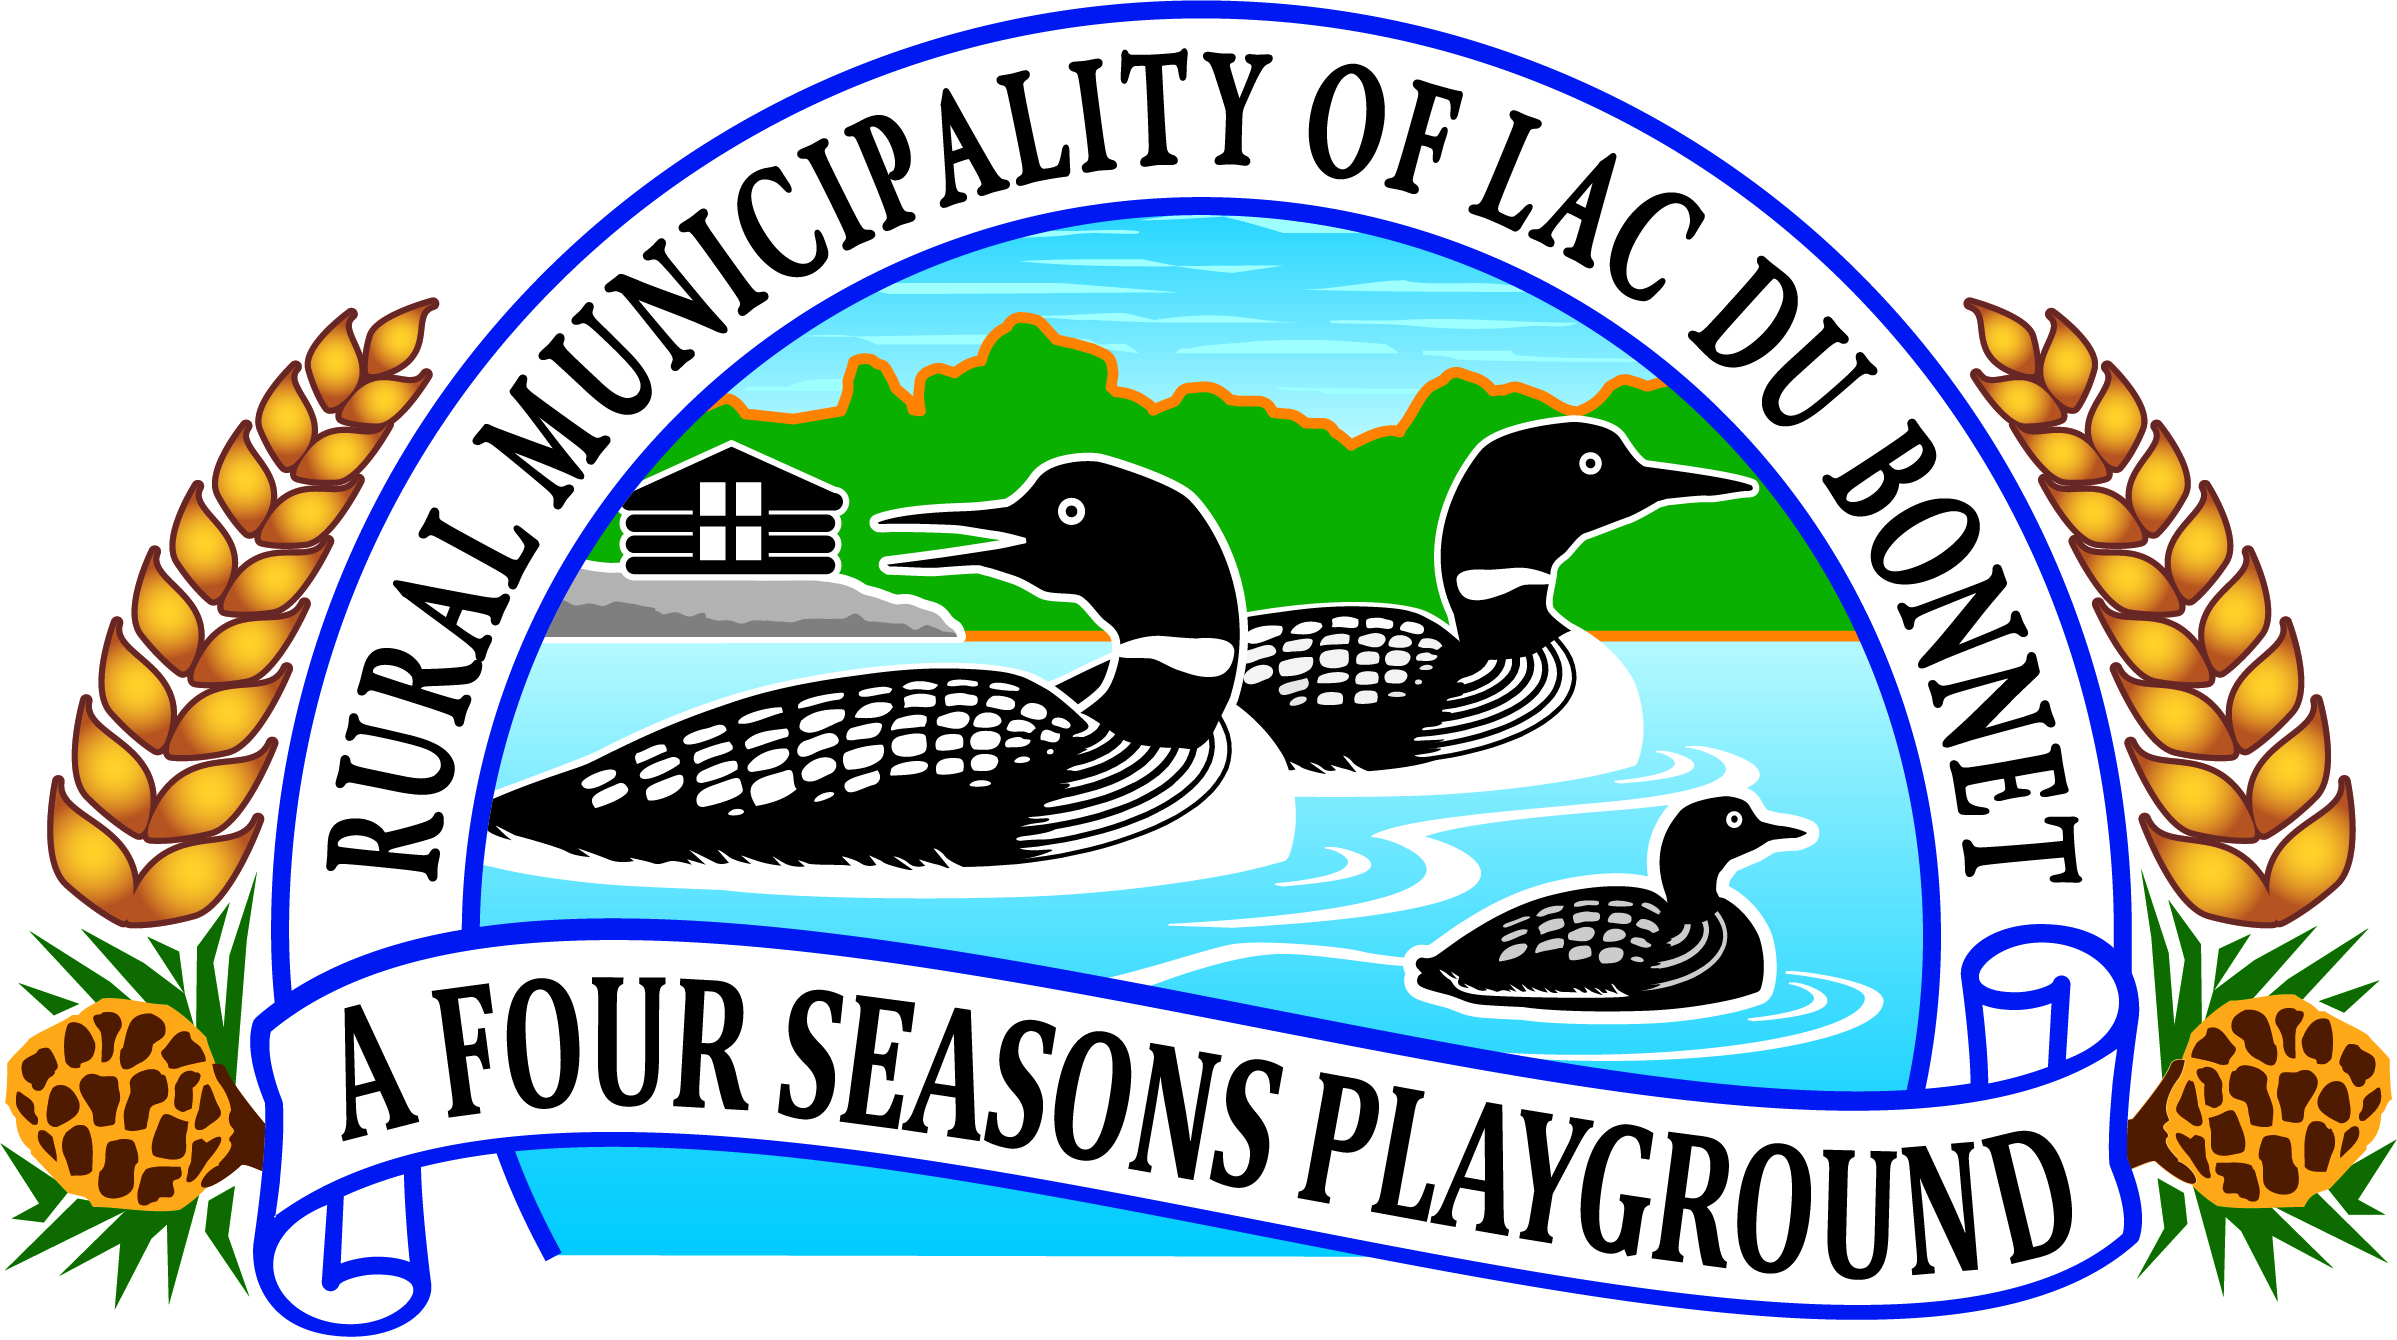 Organization logo of Rural Municipality of Lac du Bonnet